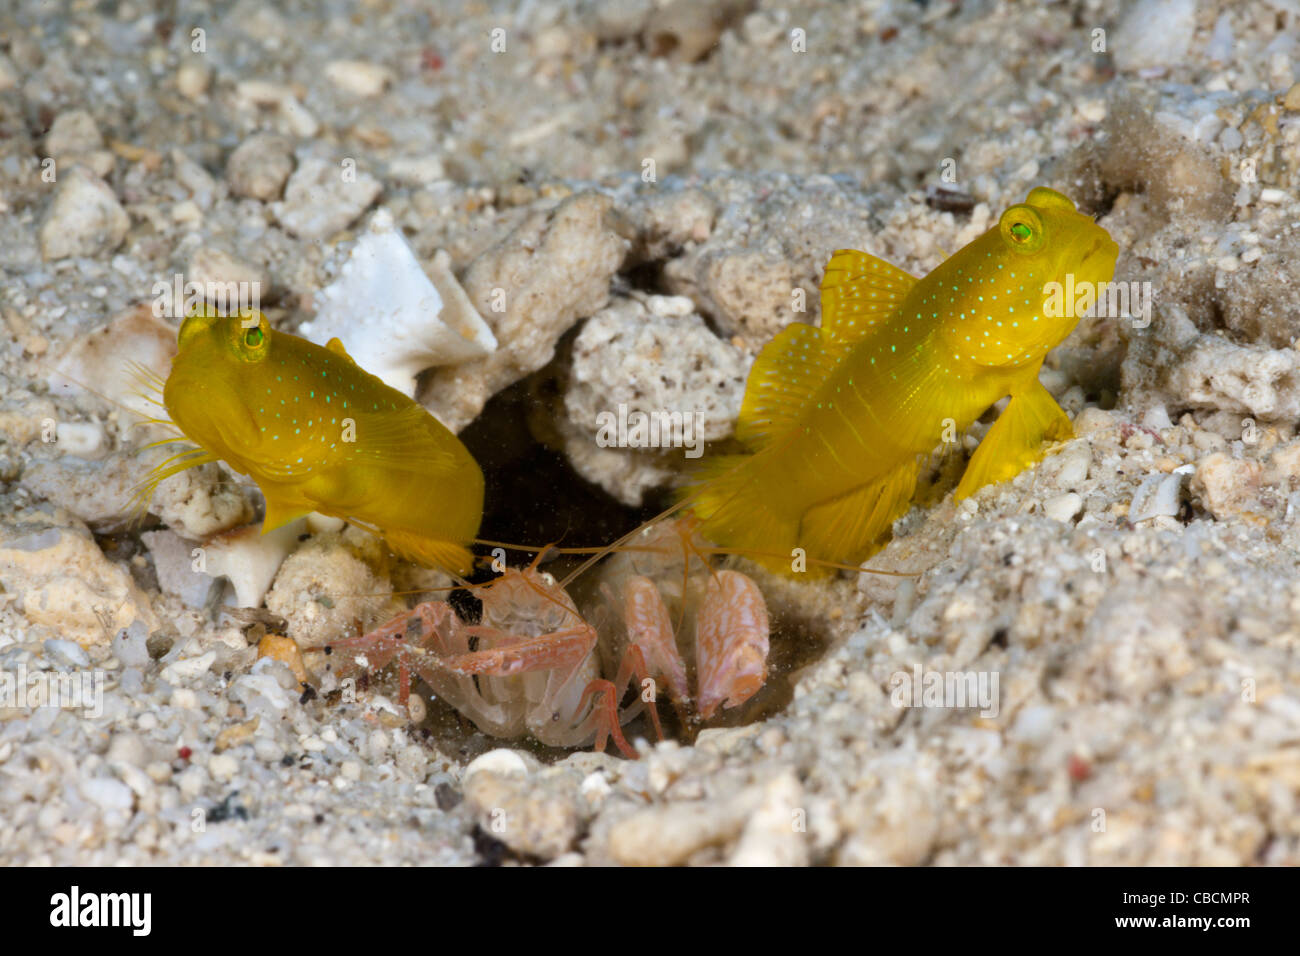 Yellow Prawn Goby in symbiotic with Snapping Shrimp, Cryptocentrus cinctus, Alpheus ochrostriatus indonesia symbiosis behavior Stock Photo